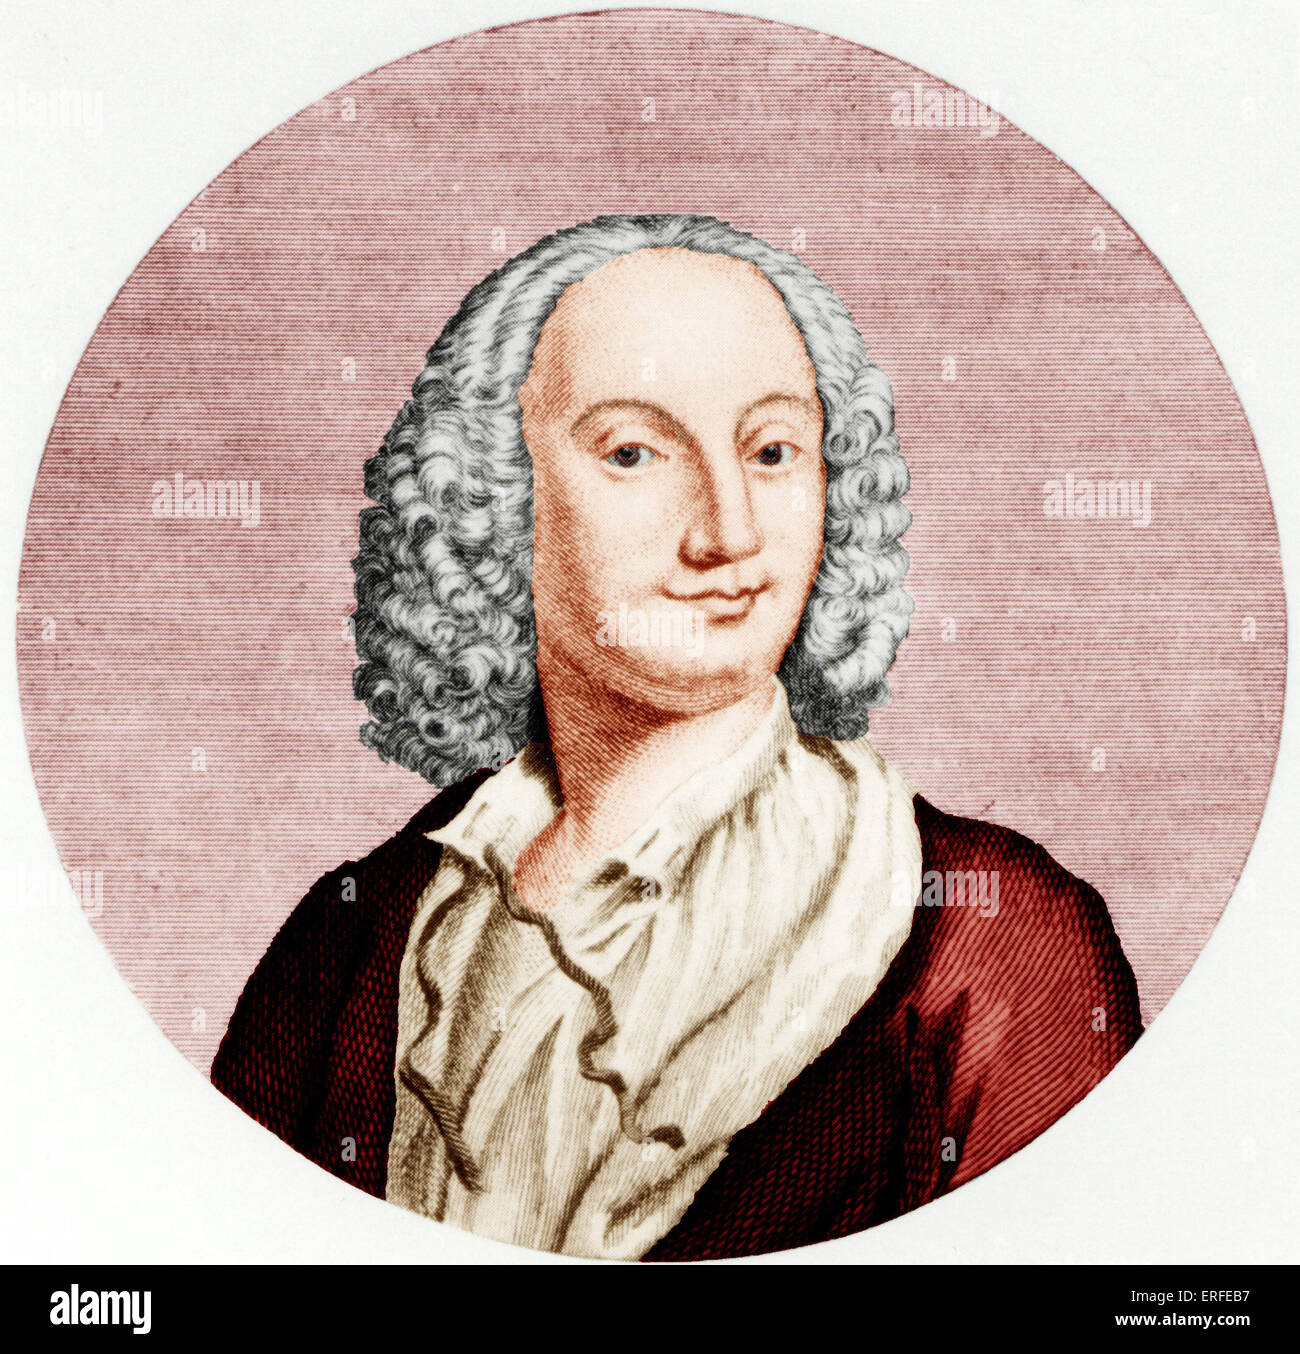 Antonio Vivaldi Italian composer & violinist, 1678-1741. Stock Photo